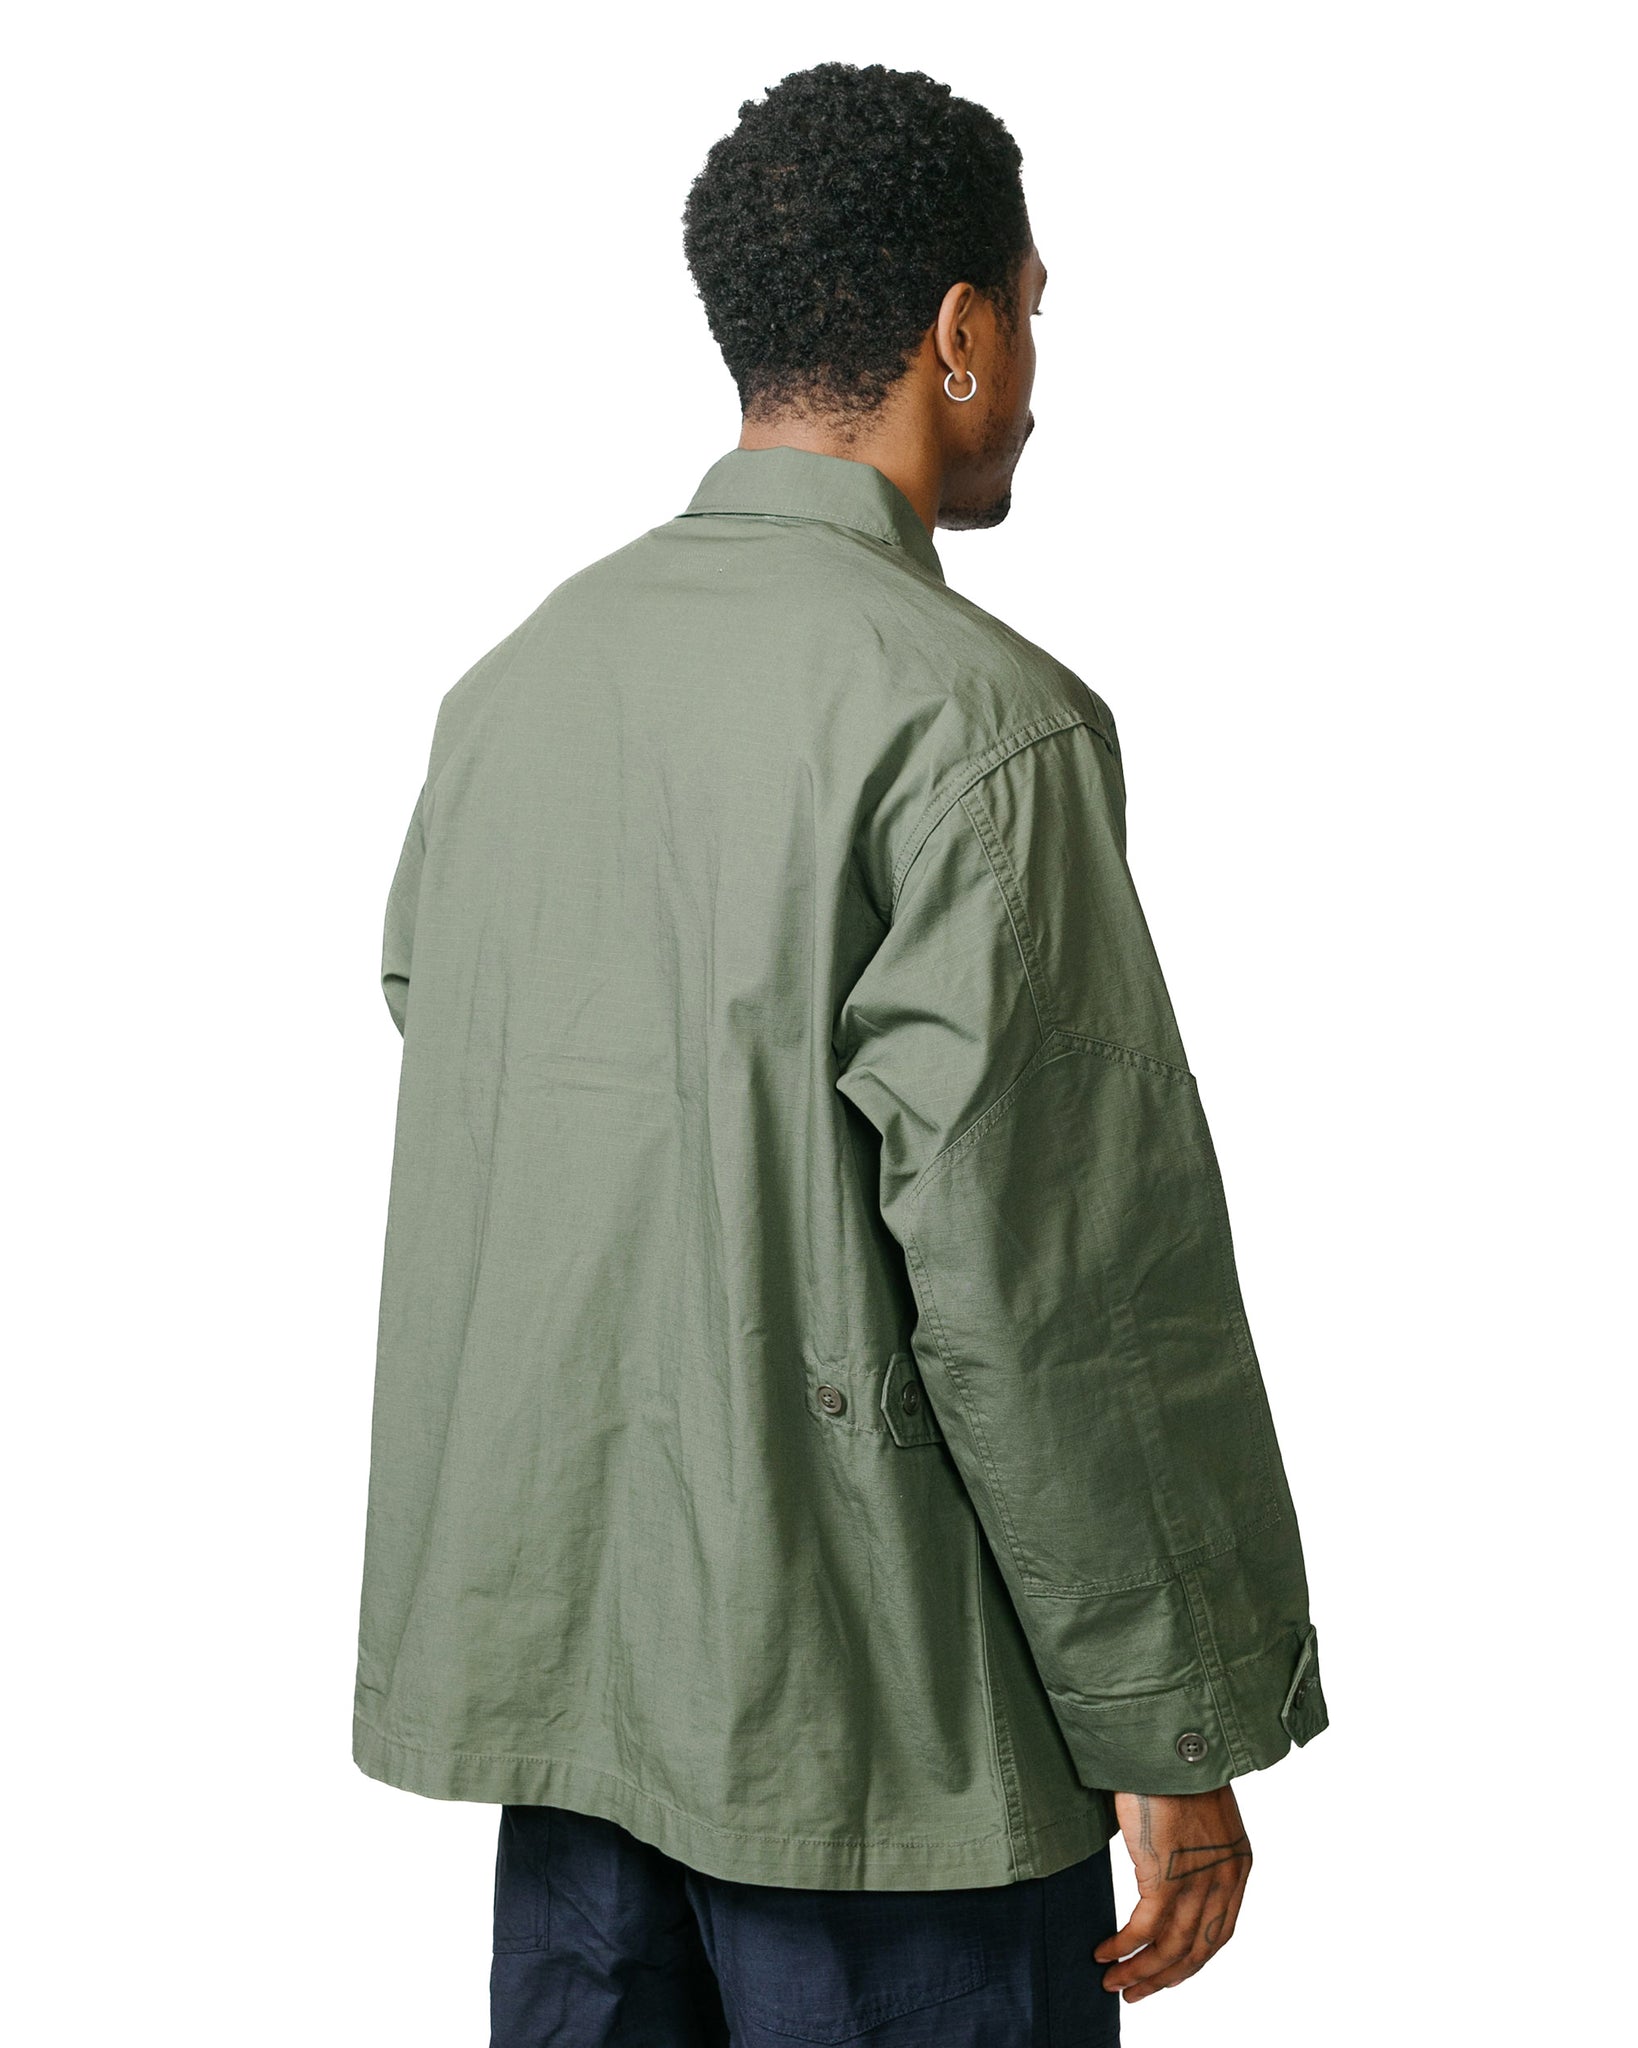 Engineered Garments BDU Jacket Olive Cotton Ripstop model back